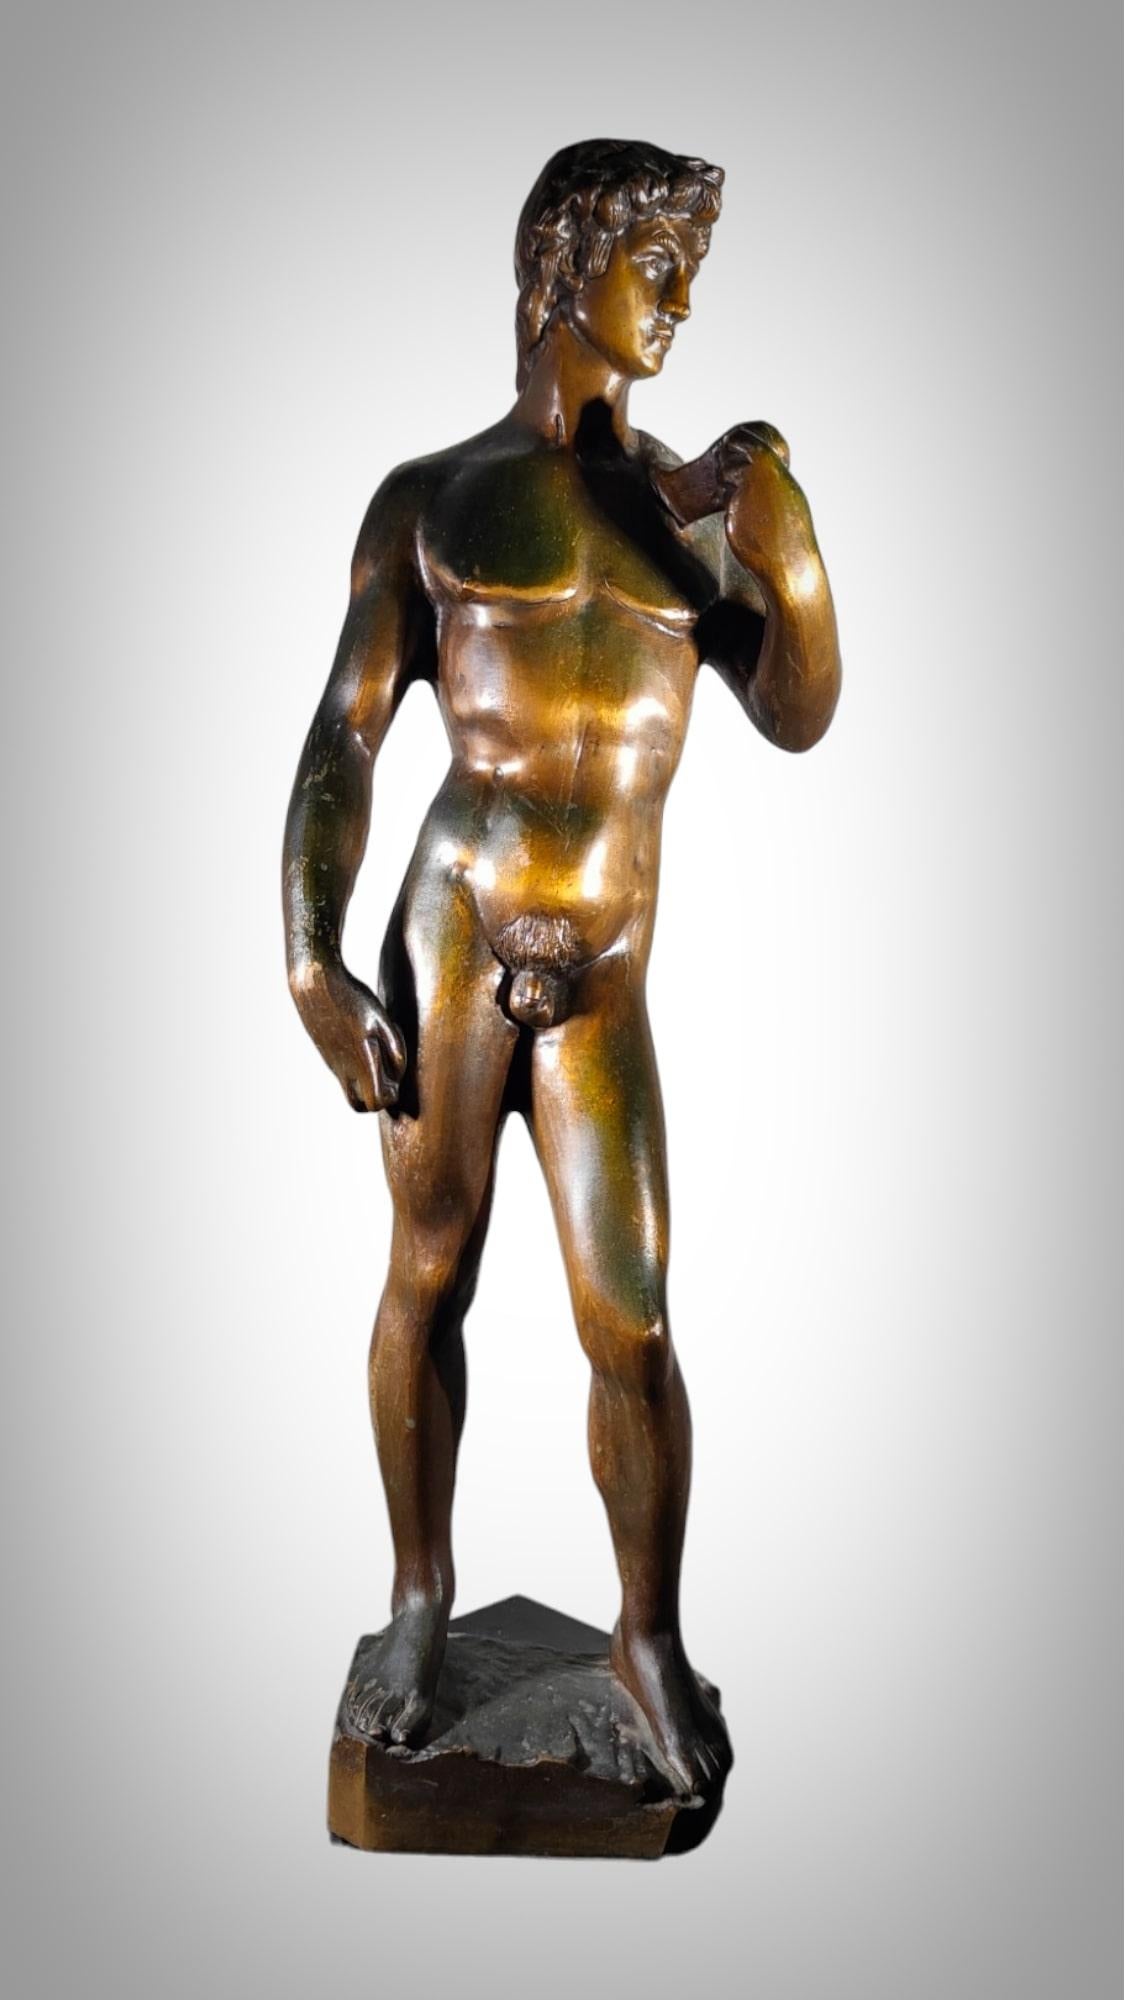 Bronze Sculpture Of David By Michelangelo
Large patinated bronze sculpture of David by Michelangelo. Excellent condition. 1950s. Dimensions: 84x20x15 cm